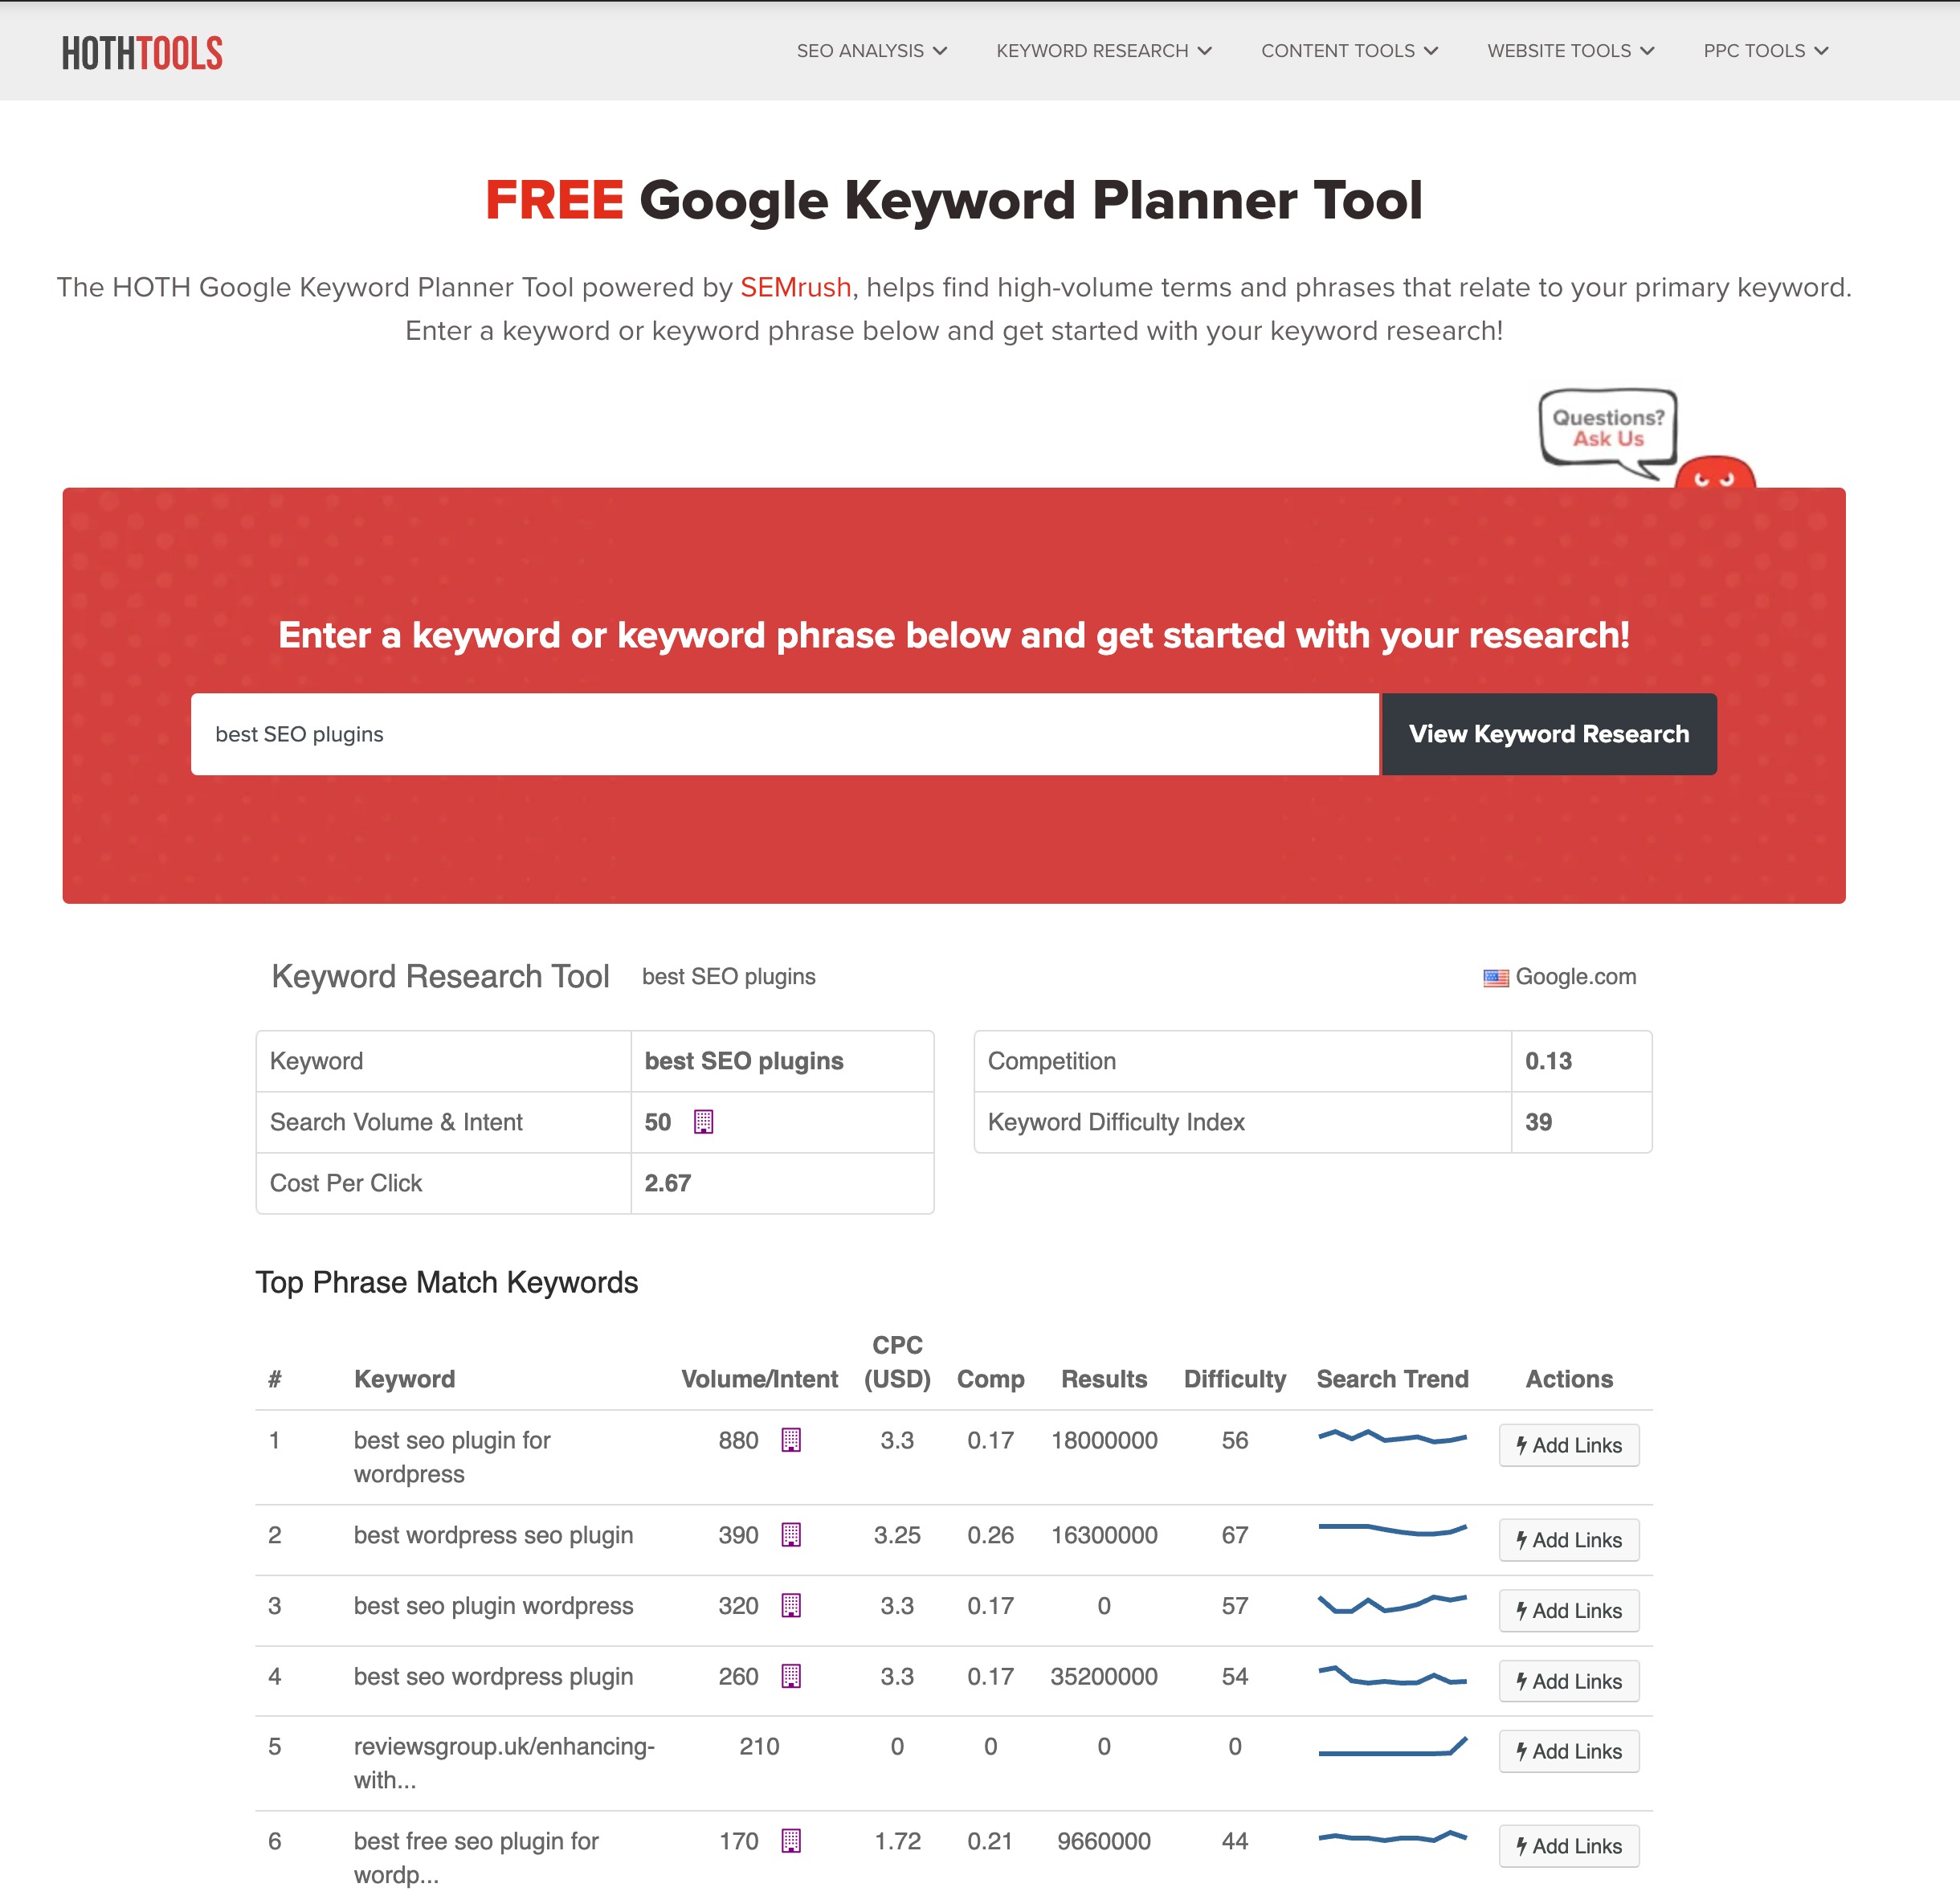 The Hoth's Google Keyword Planner Tool